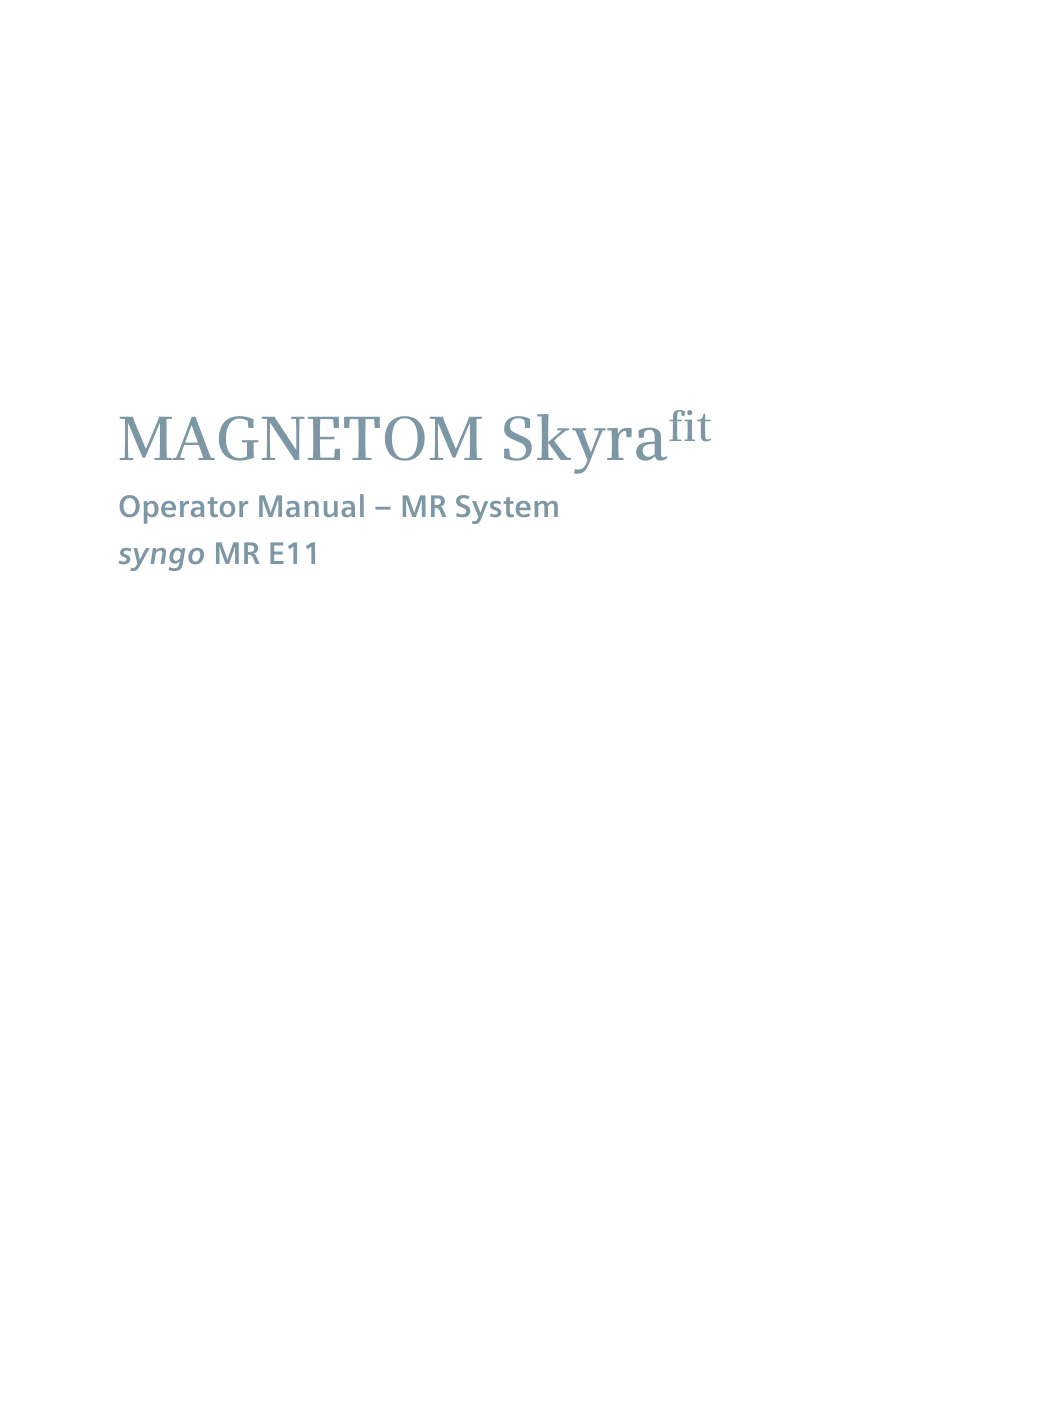 MAGNETOM SkyrafitOperator Manual – MR Systemsyngo MR E11